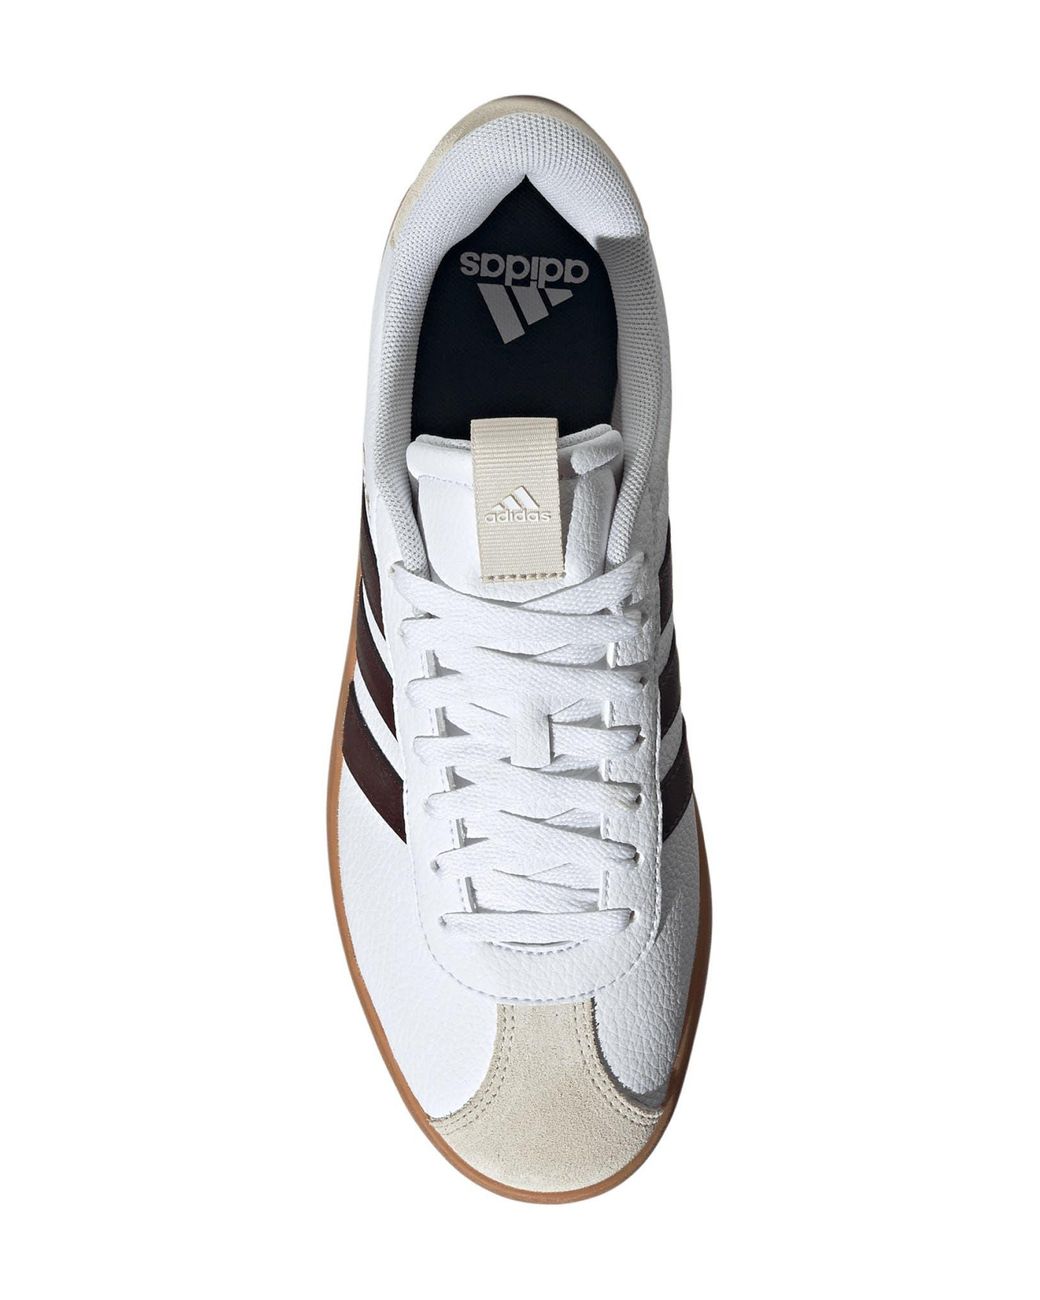 Adidas VL Court 3.0 Sneaker | Men's | Black/White | Size 12 | Sneakers